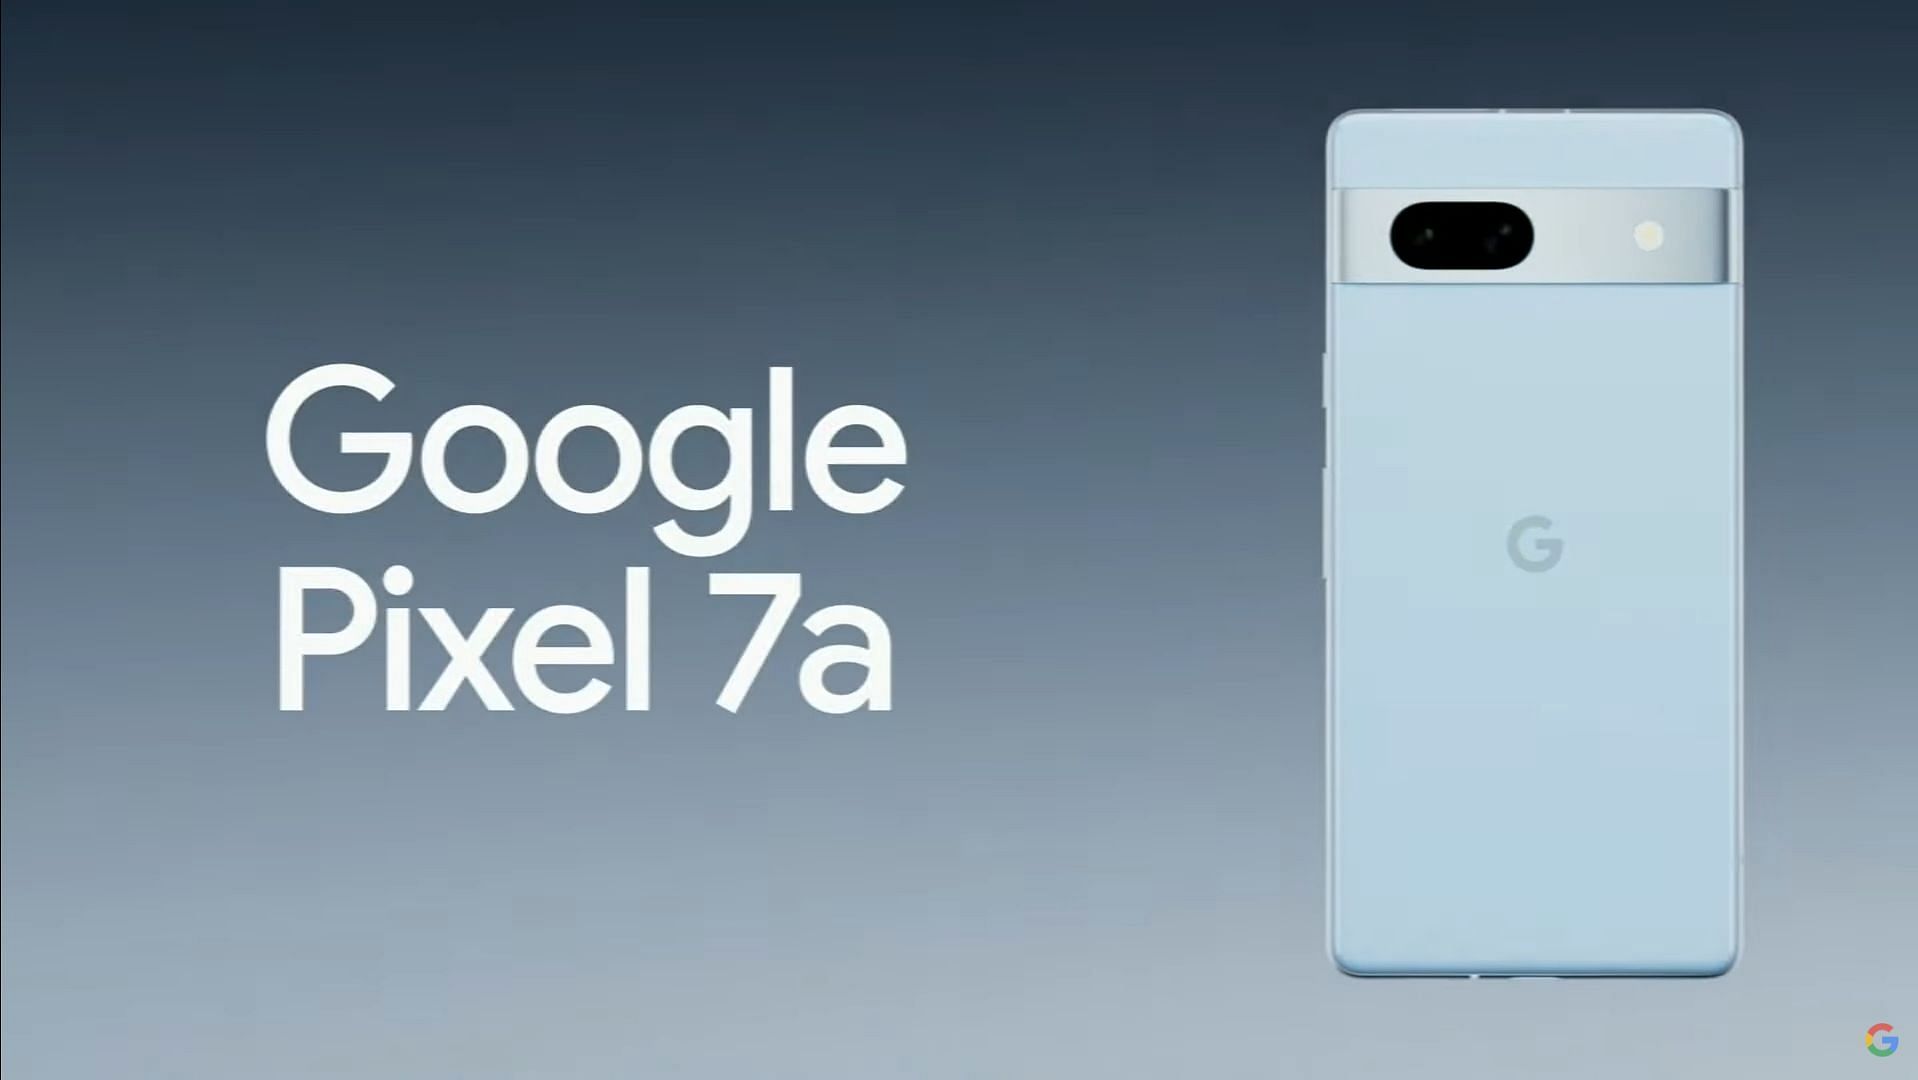 The new Google Pixel 7a smartphone (Image via Google)